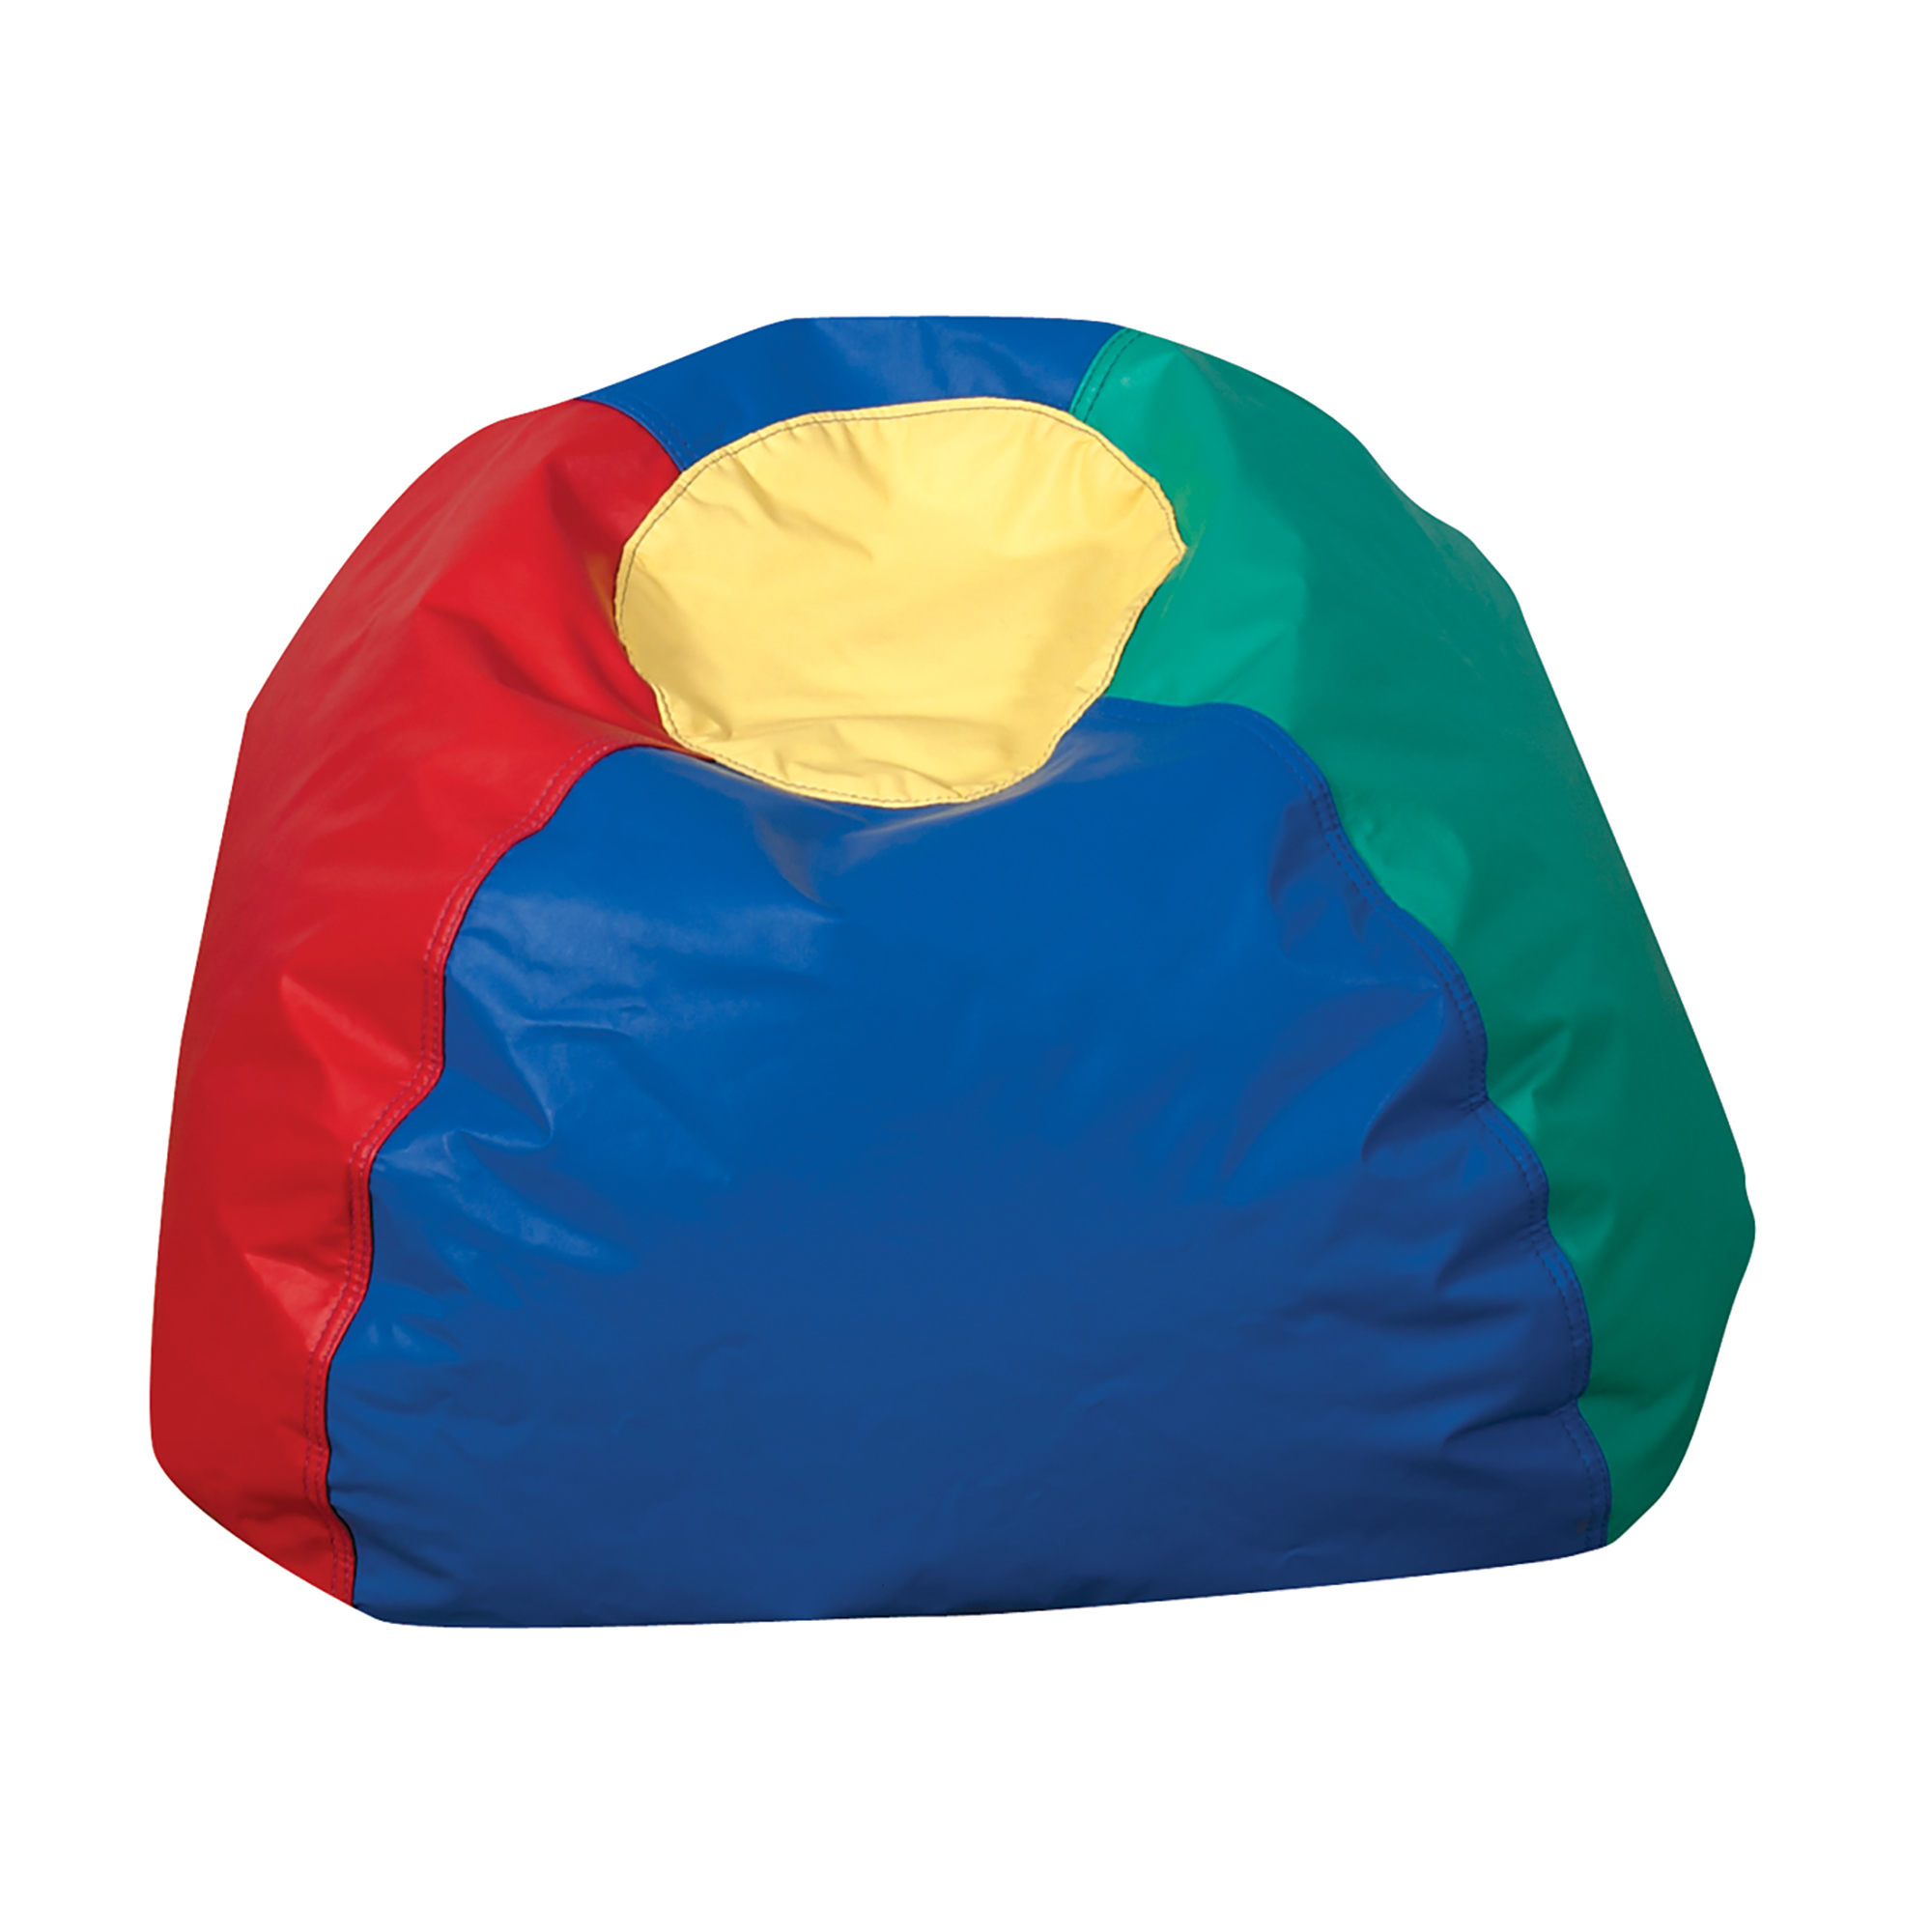 66 cm  Round Bean Bag - Rainbow Colors